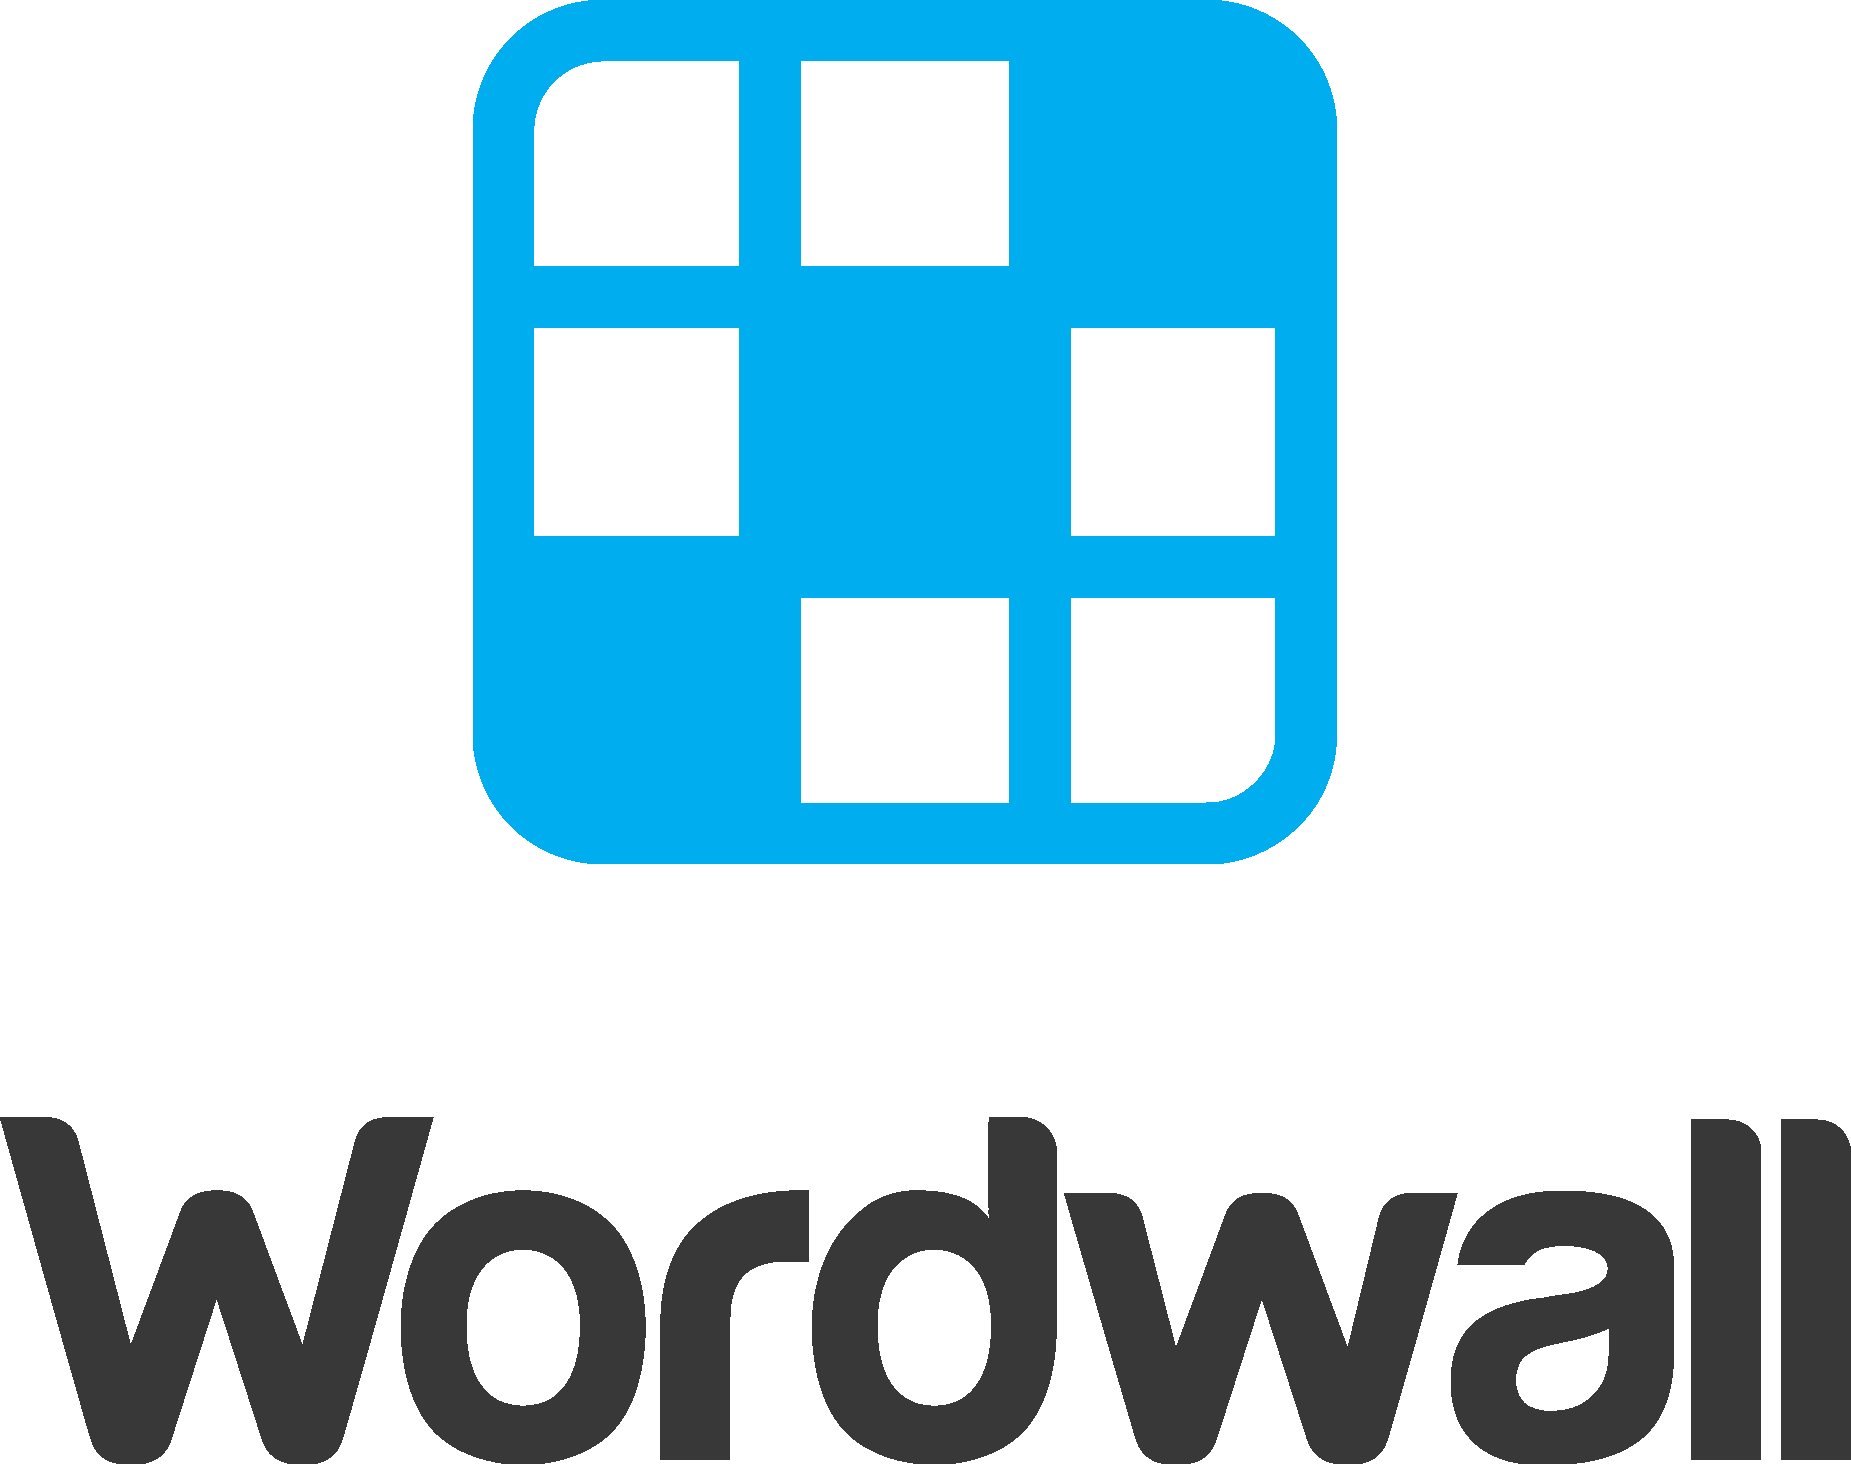 Wordwall одежда. Wordwall. World Wall логотип. Platform v логотип. Логотип платформы Планета.ру.